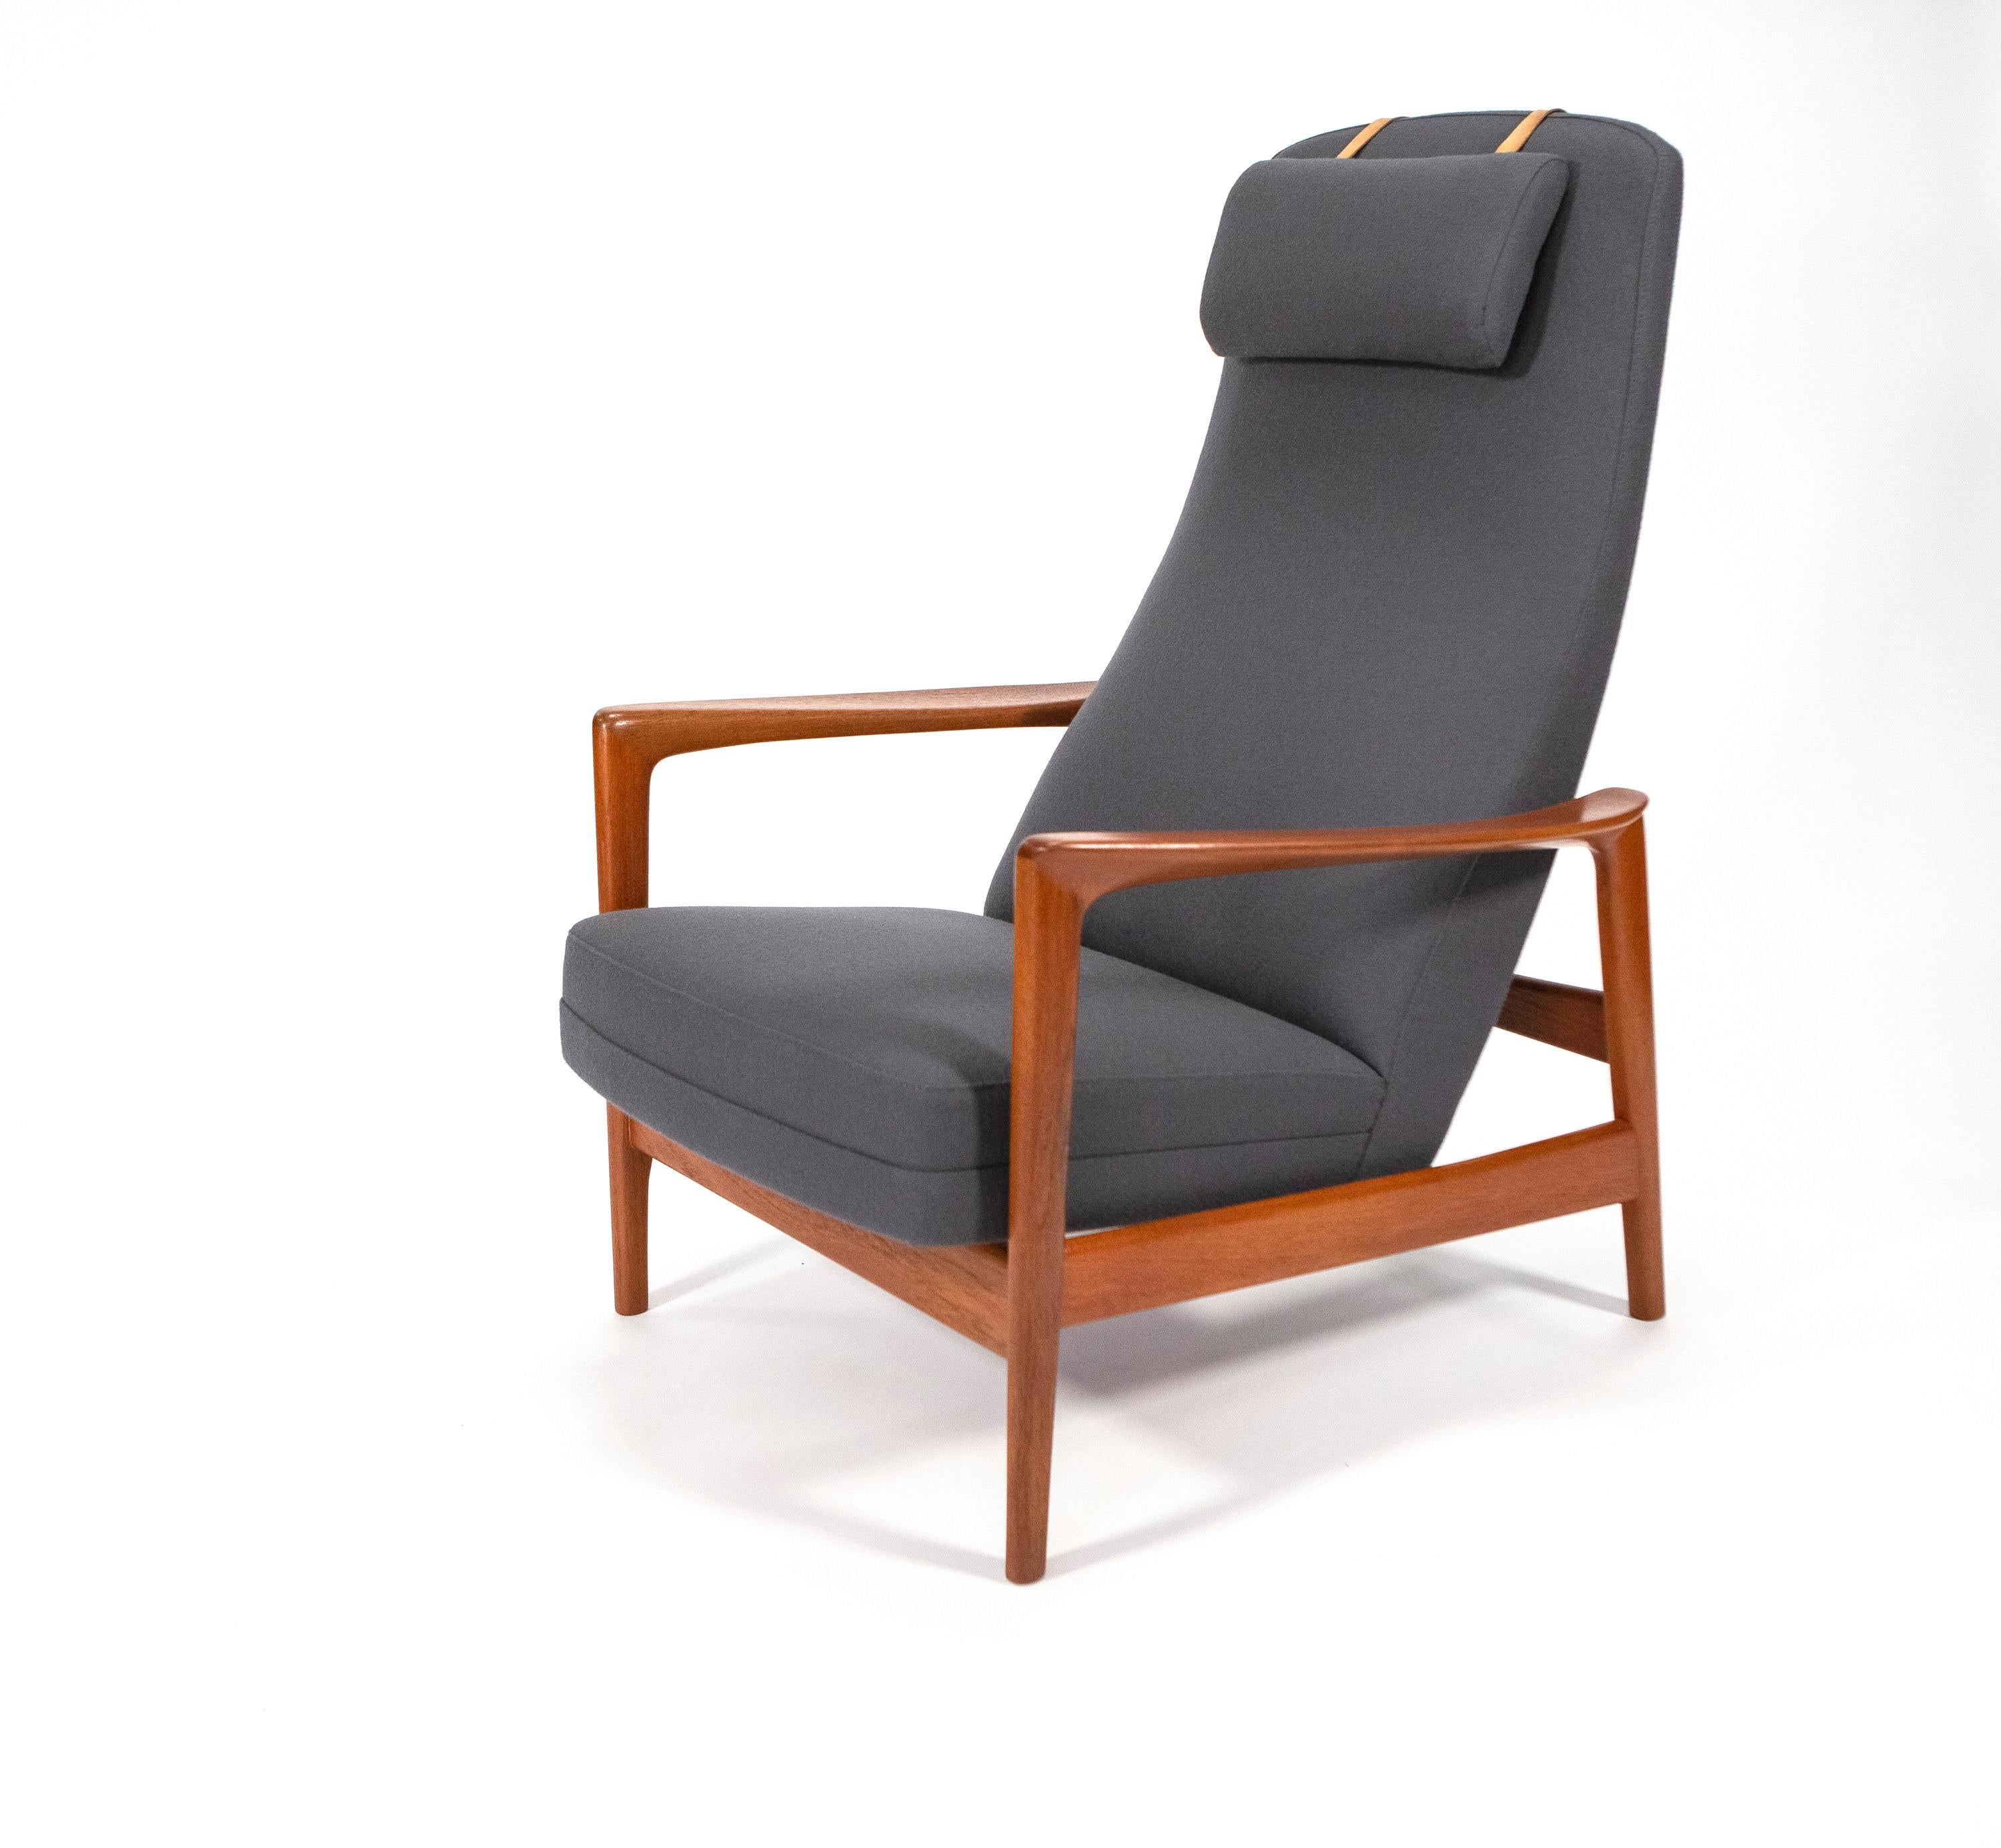 Folke Ohlsson teak 'Duxiesta' Adjustable Arm Chair by DUX - Sweden 1960's

1960's Folke Ohlsson for DUX Lounge Chair & Ottoman, Teak Wood Adjustable Frame. Made in Sweden.

Adjustable recliner for dialed in comfort. New upholstery in Gudbrandsdalens